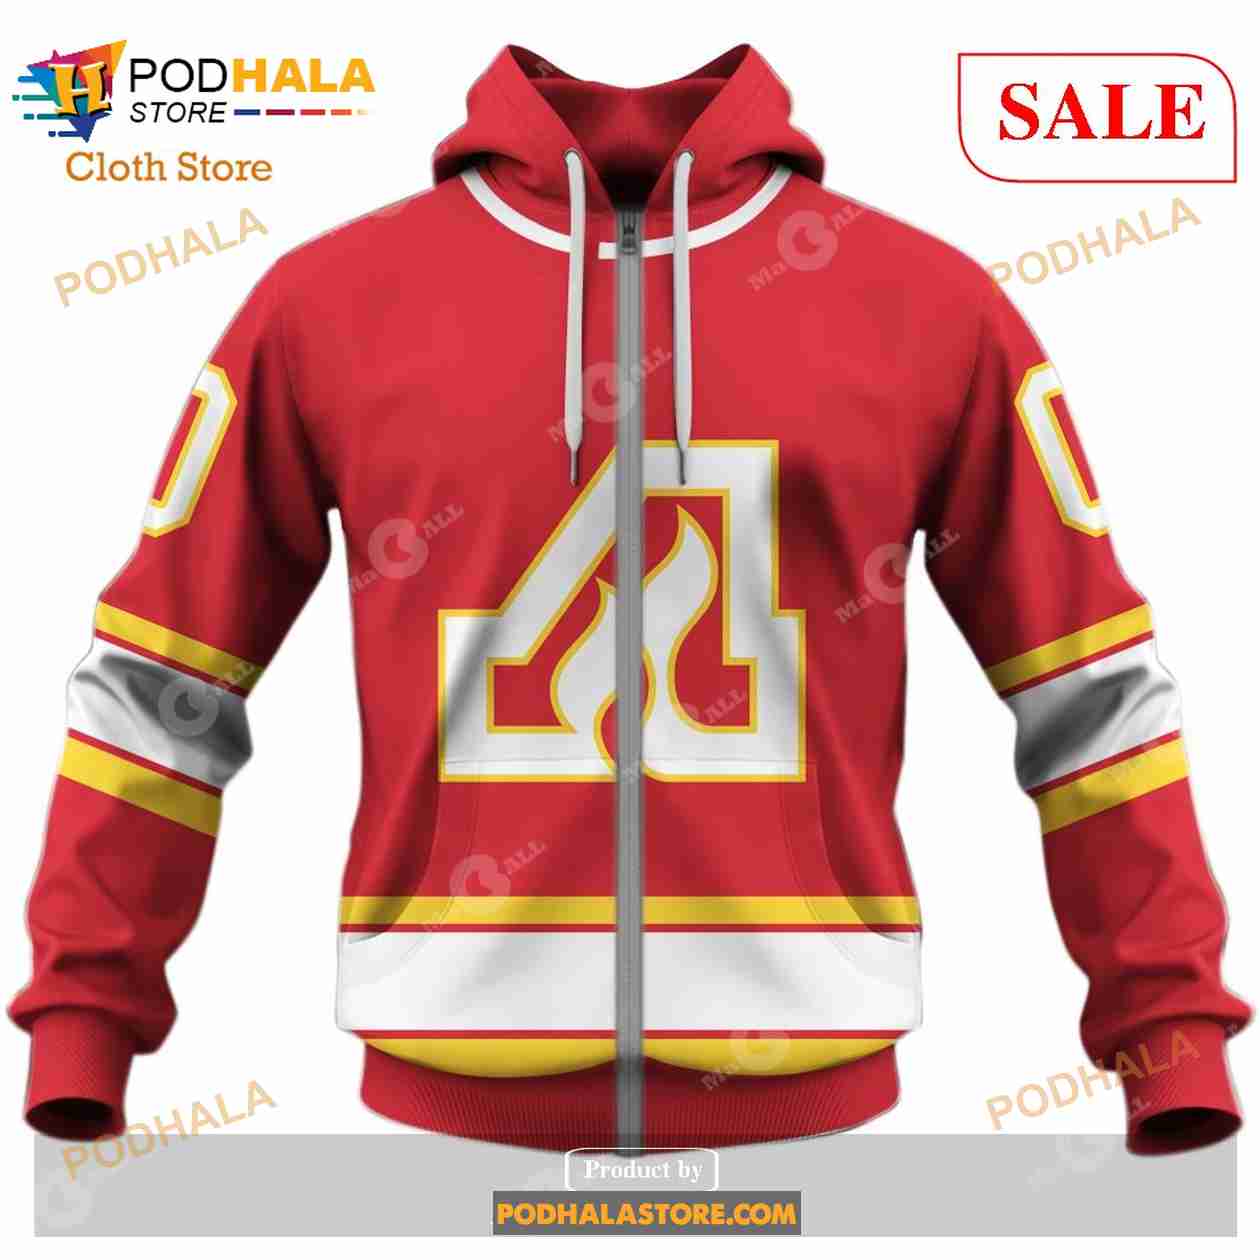 Calgary Flames Reverse Retro Kits 2022 Personalized Hoodie